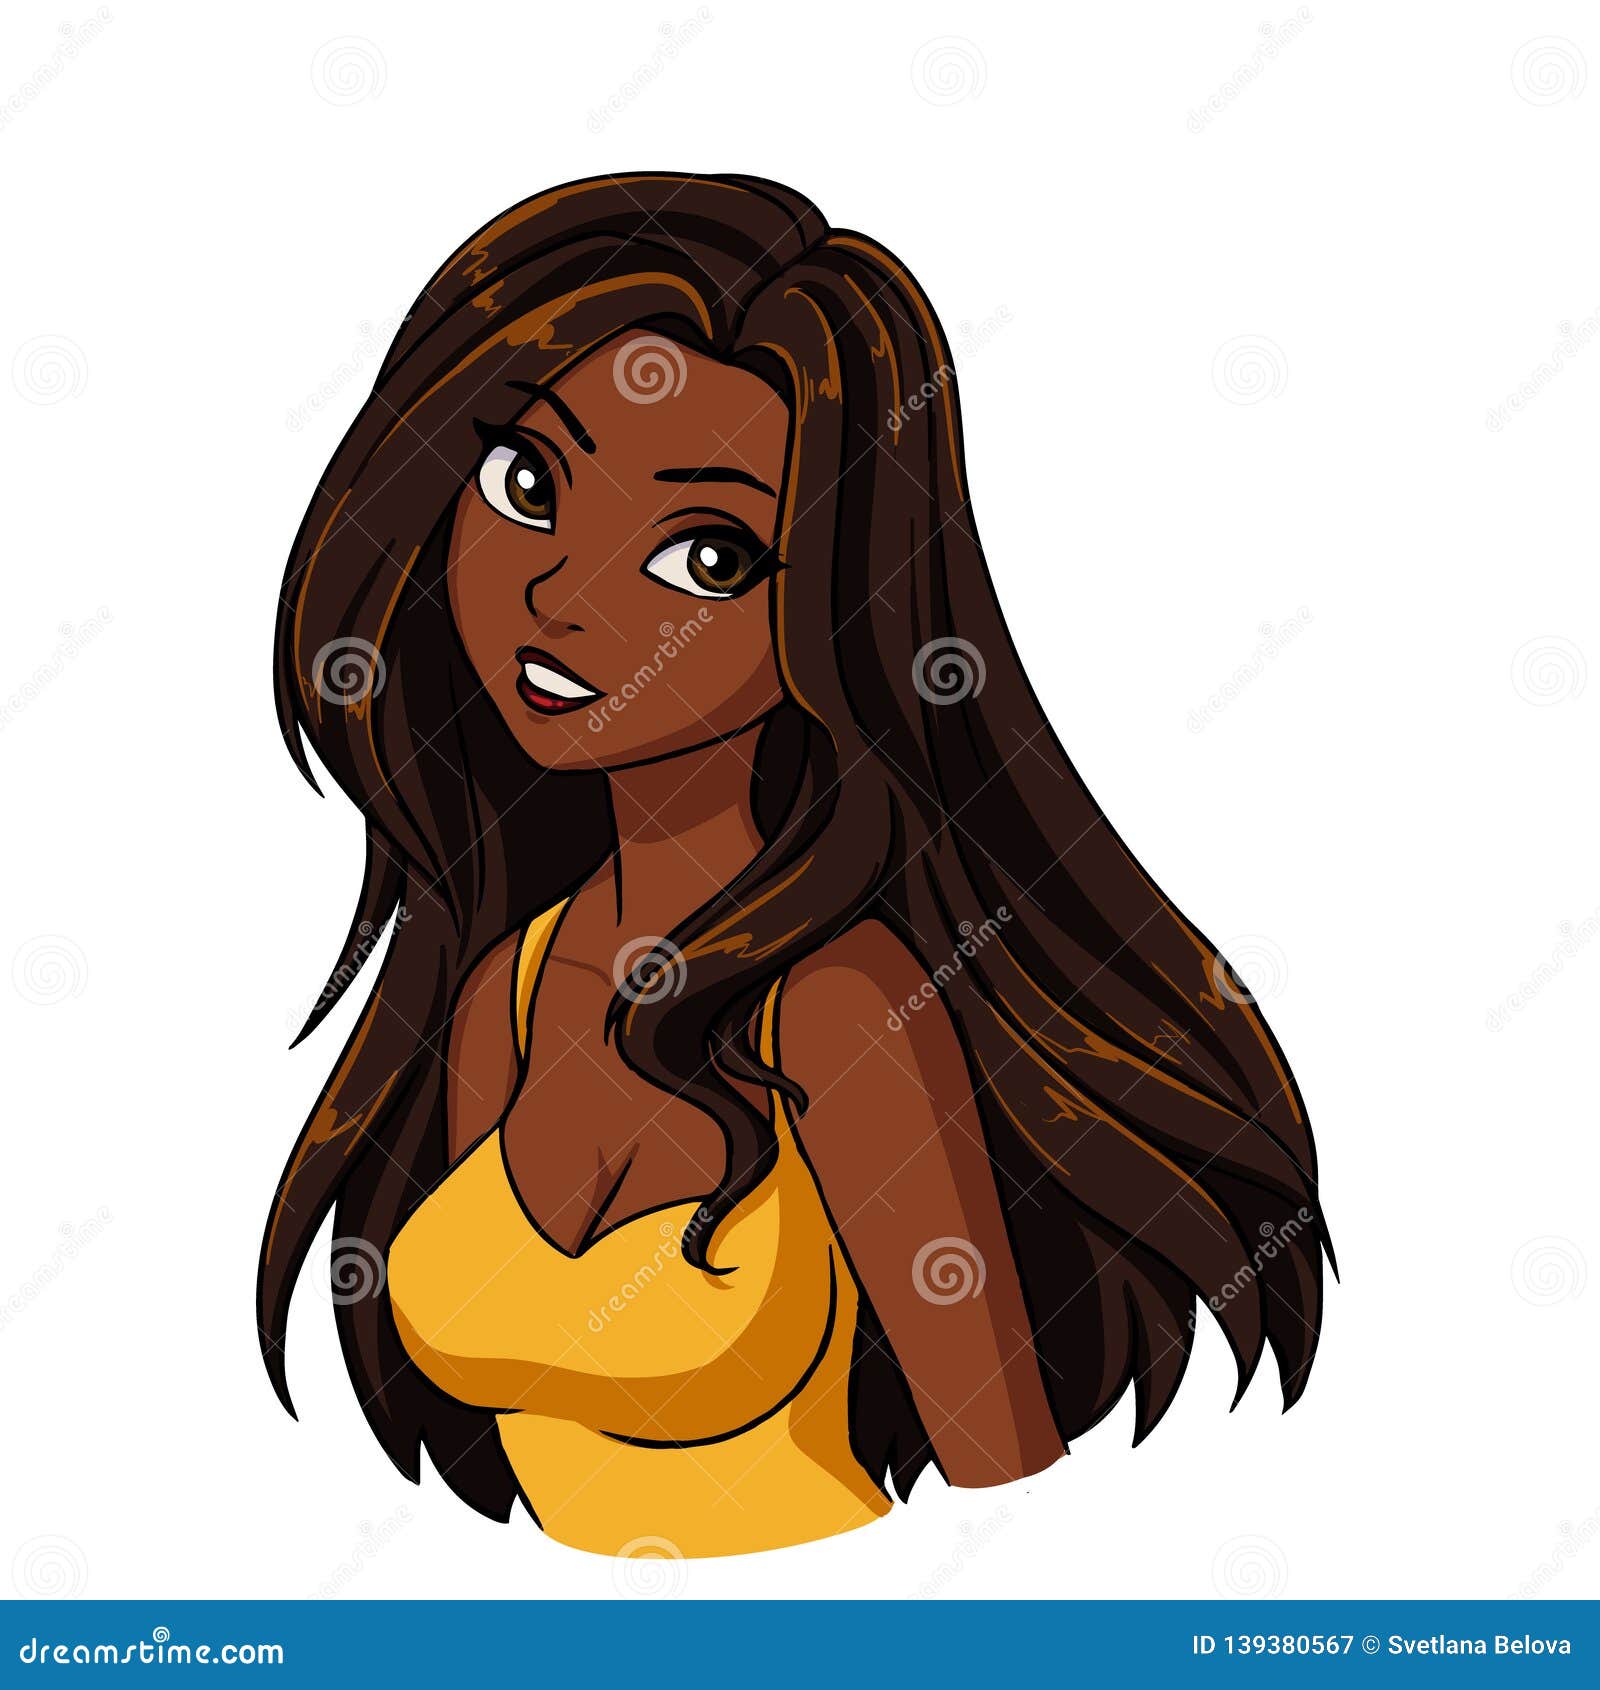 Beautiful Cartoon Smiling Girl Portrait. Long Brown Hair, Big Black Eyes,  Yellow Shirt Stock Illustration - Illustration of brown, femininity:  139380567